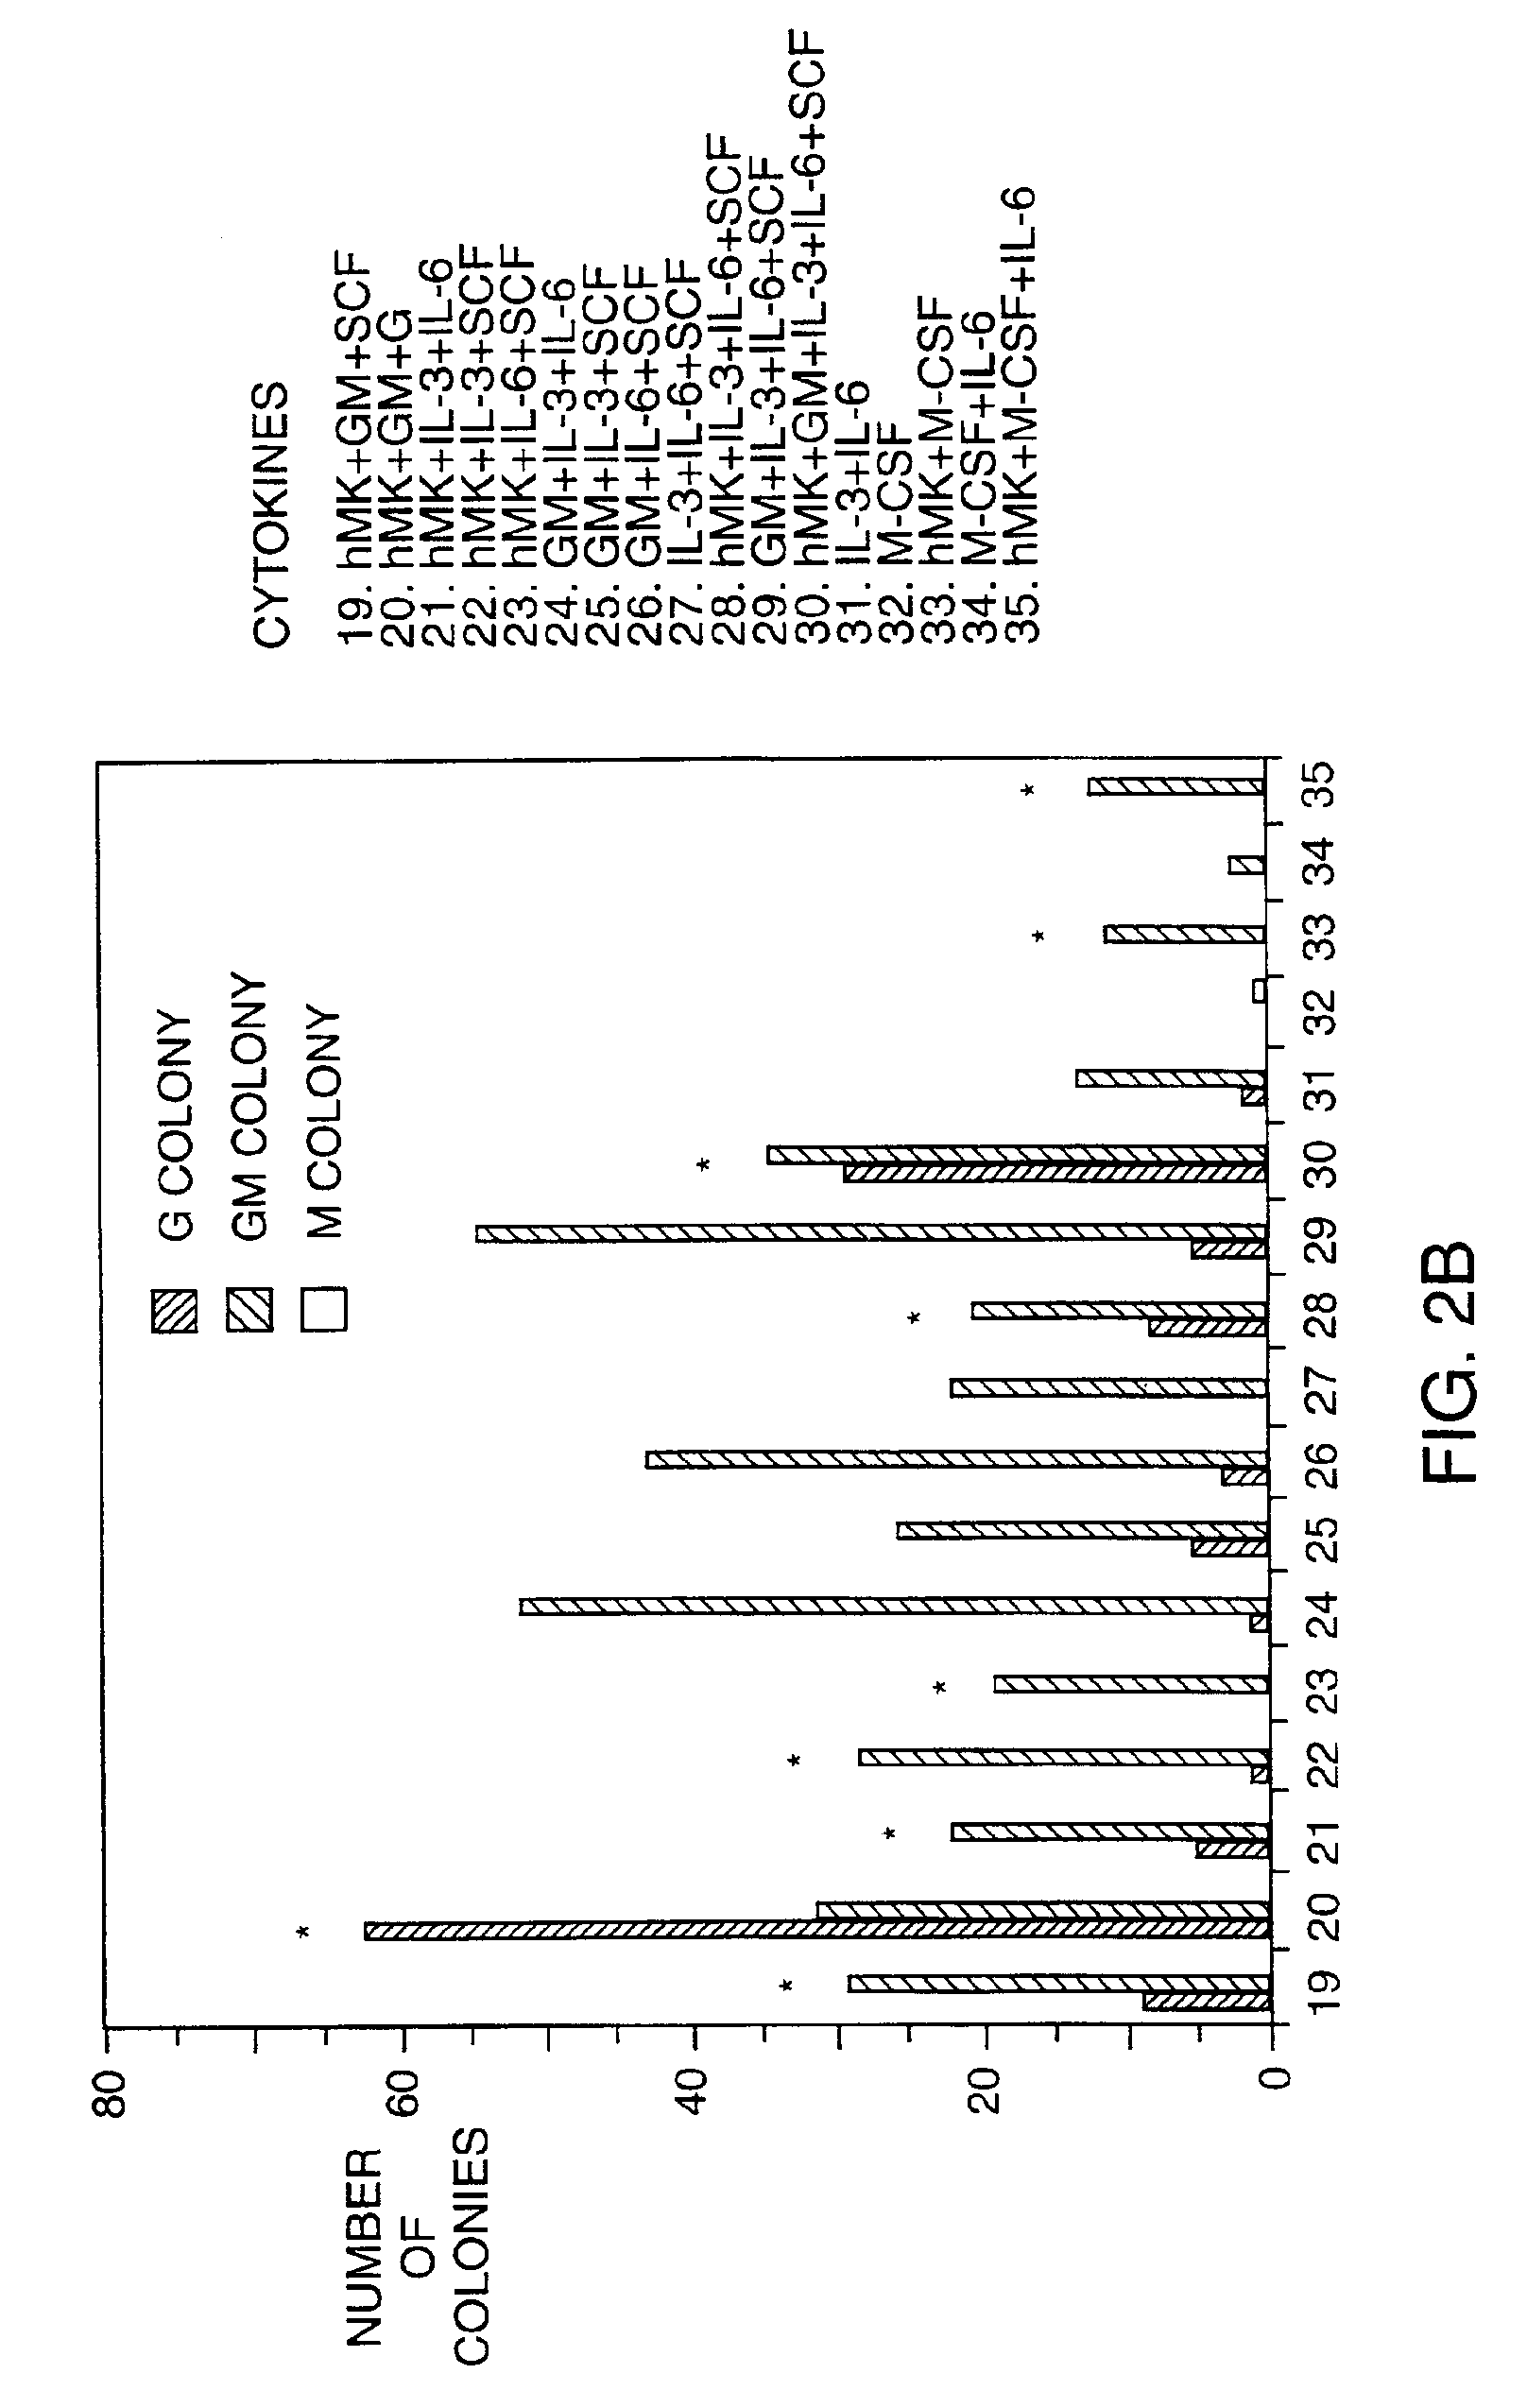 Expansion of hematopoietic cells using midkine or pleiotrophin